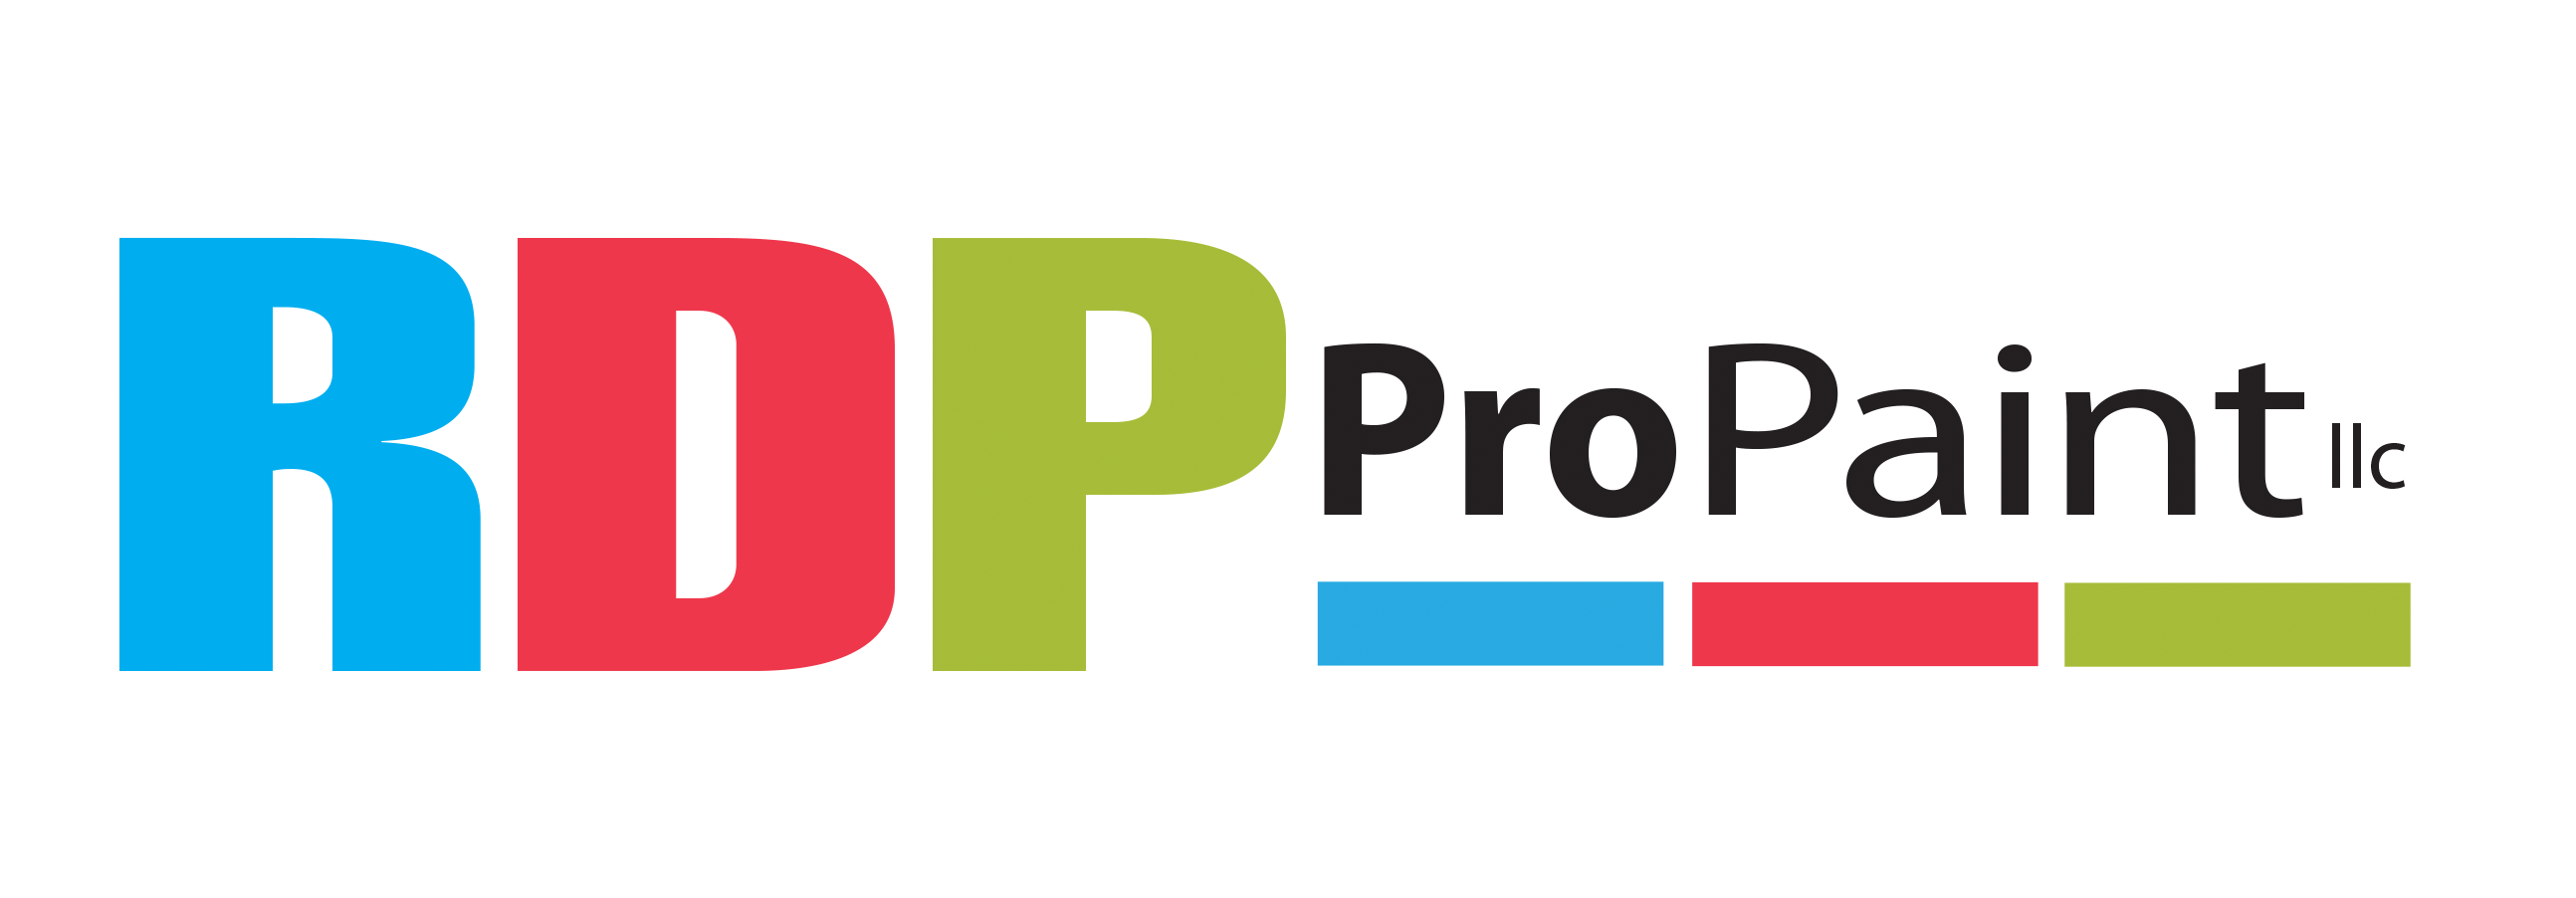 RDP Logo - rdp pro paint logo